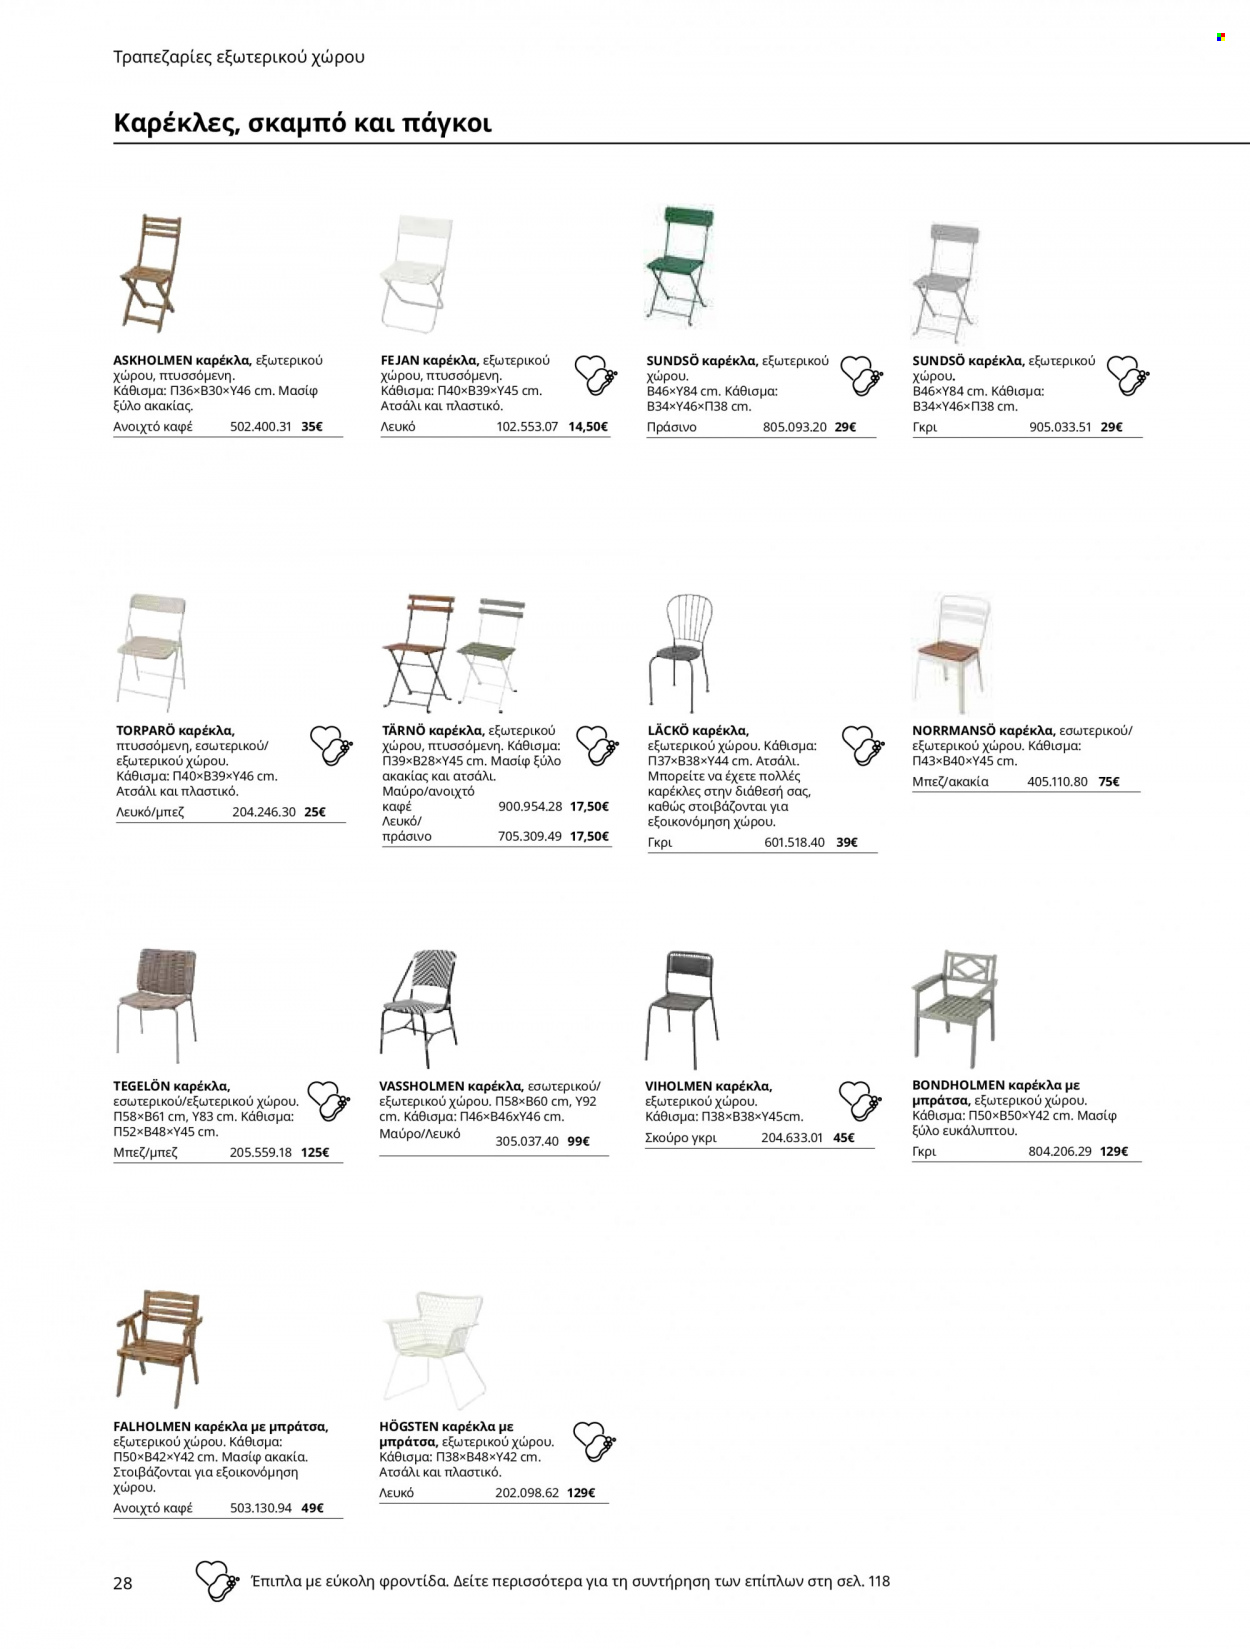 thumbnail - Φυλλάδια IKEA - Εκπτωτικά προϊόντα - καρέκλα, σκαμπο, πάγκοι. Σελίδα 28.